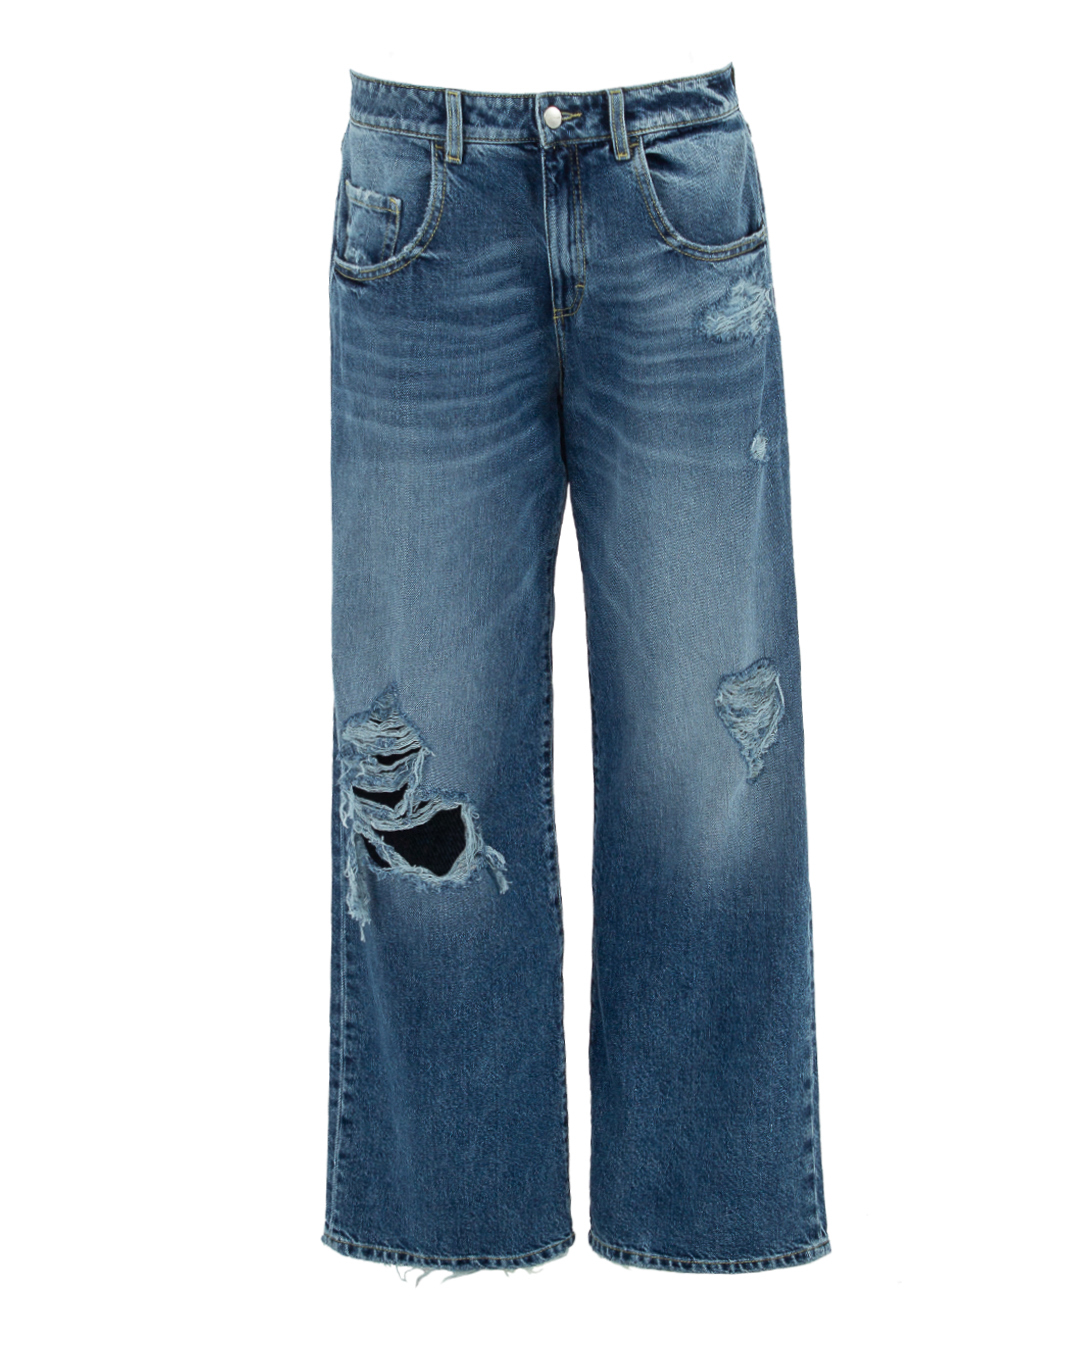 джинсы ICON DENIM BEAID703 синий 25, размер 25 - фото 1